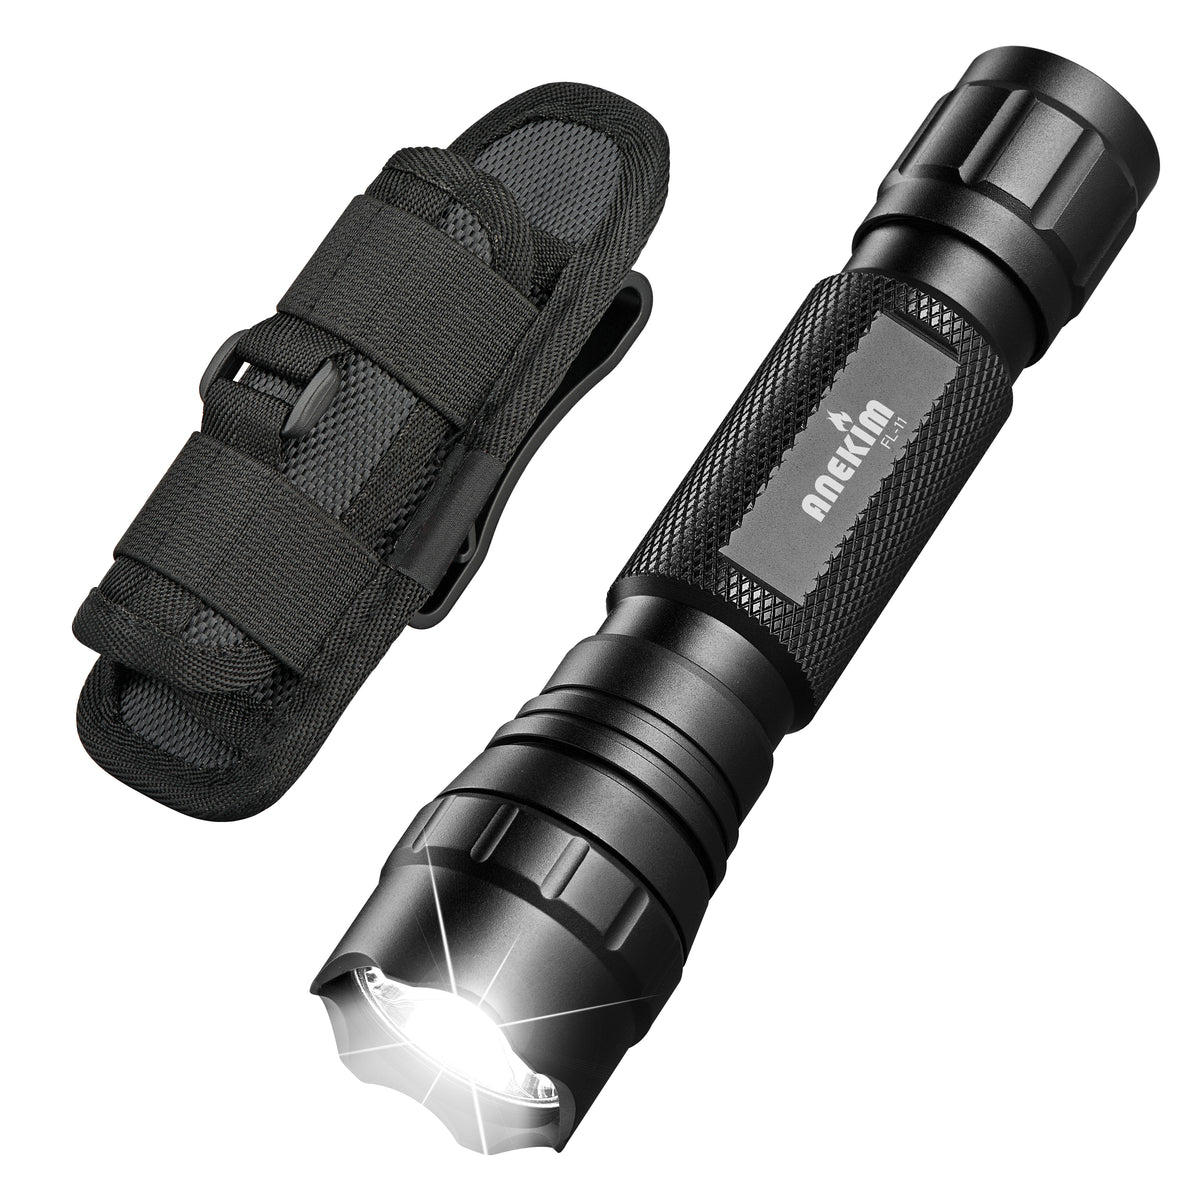 ANEKIM High-Powered Tactical Flashlight with Holster - 1000 Lumen LED Law Enforcement Flashlight, Single Mode, Belt Holster,Compact Durable FL-11